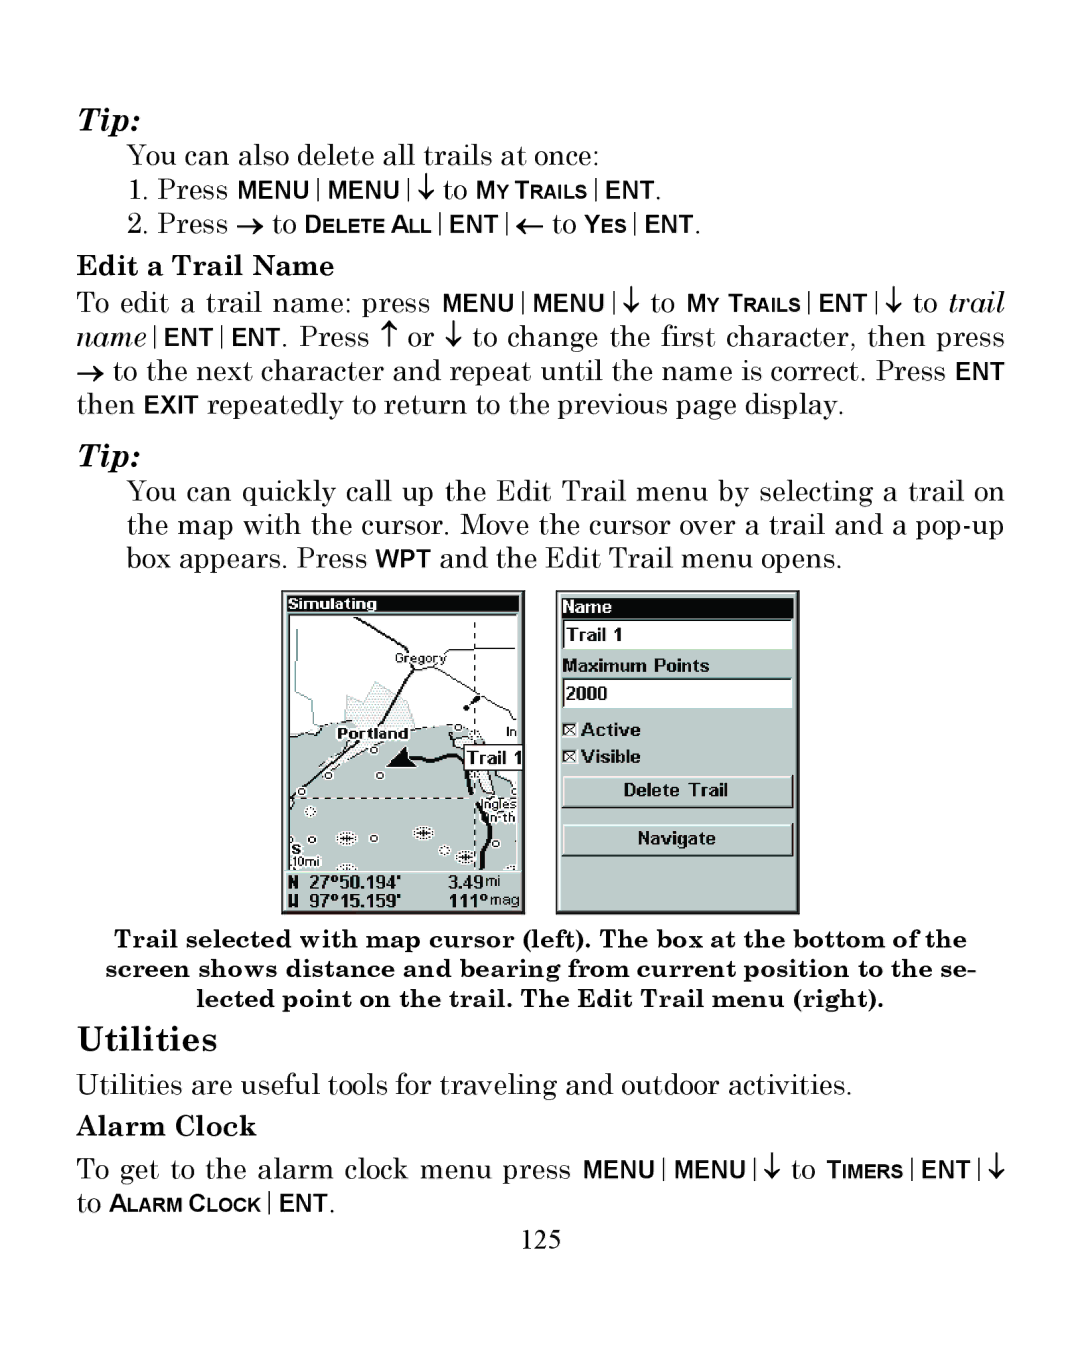 Eagle Electronics 350 S/MAP manual Utilities, Edit a Trail Name, Alarm Clock, 125 